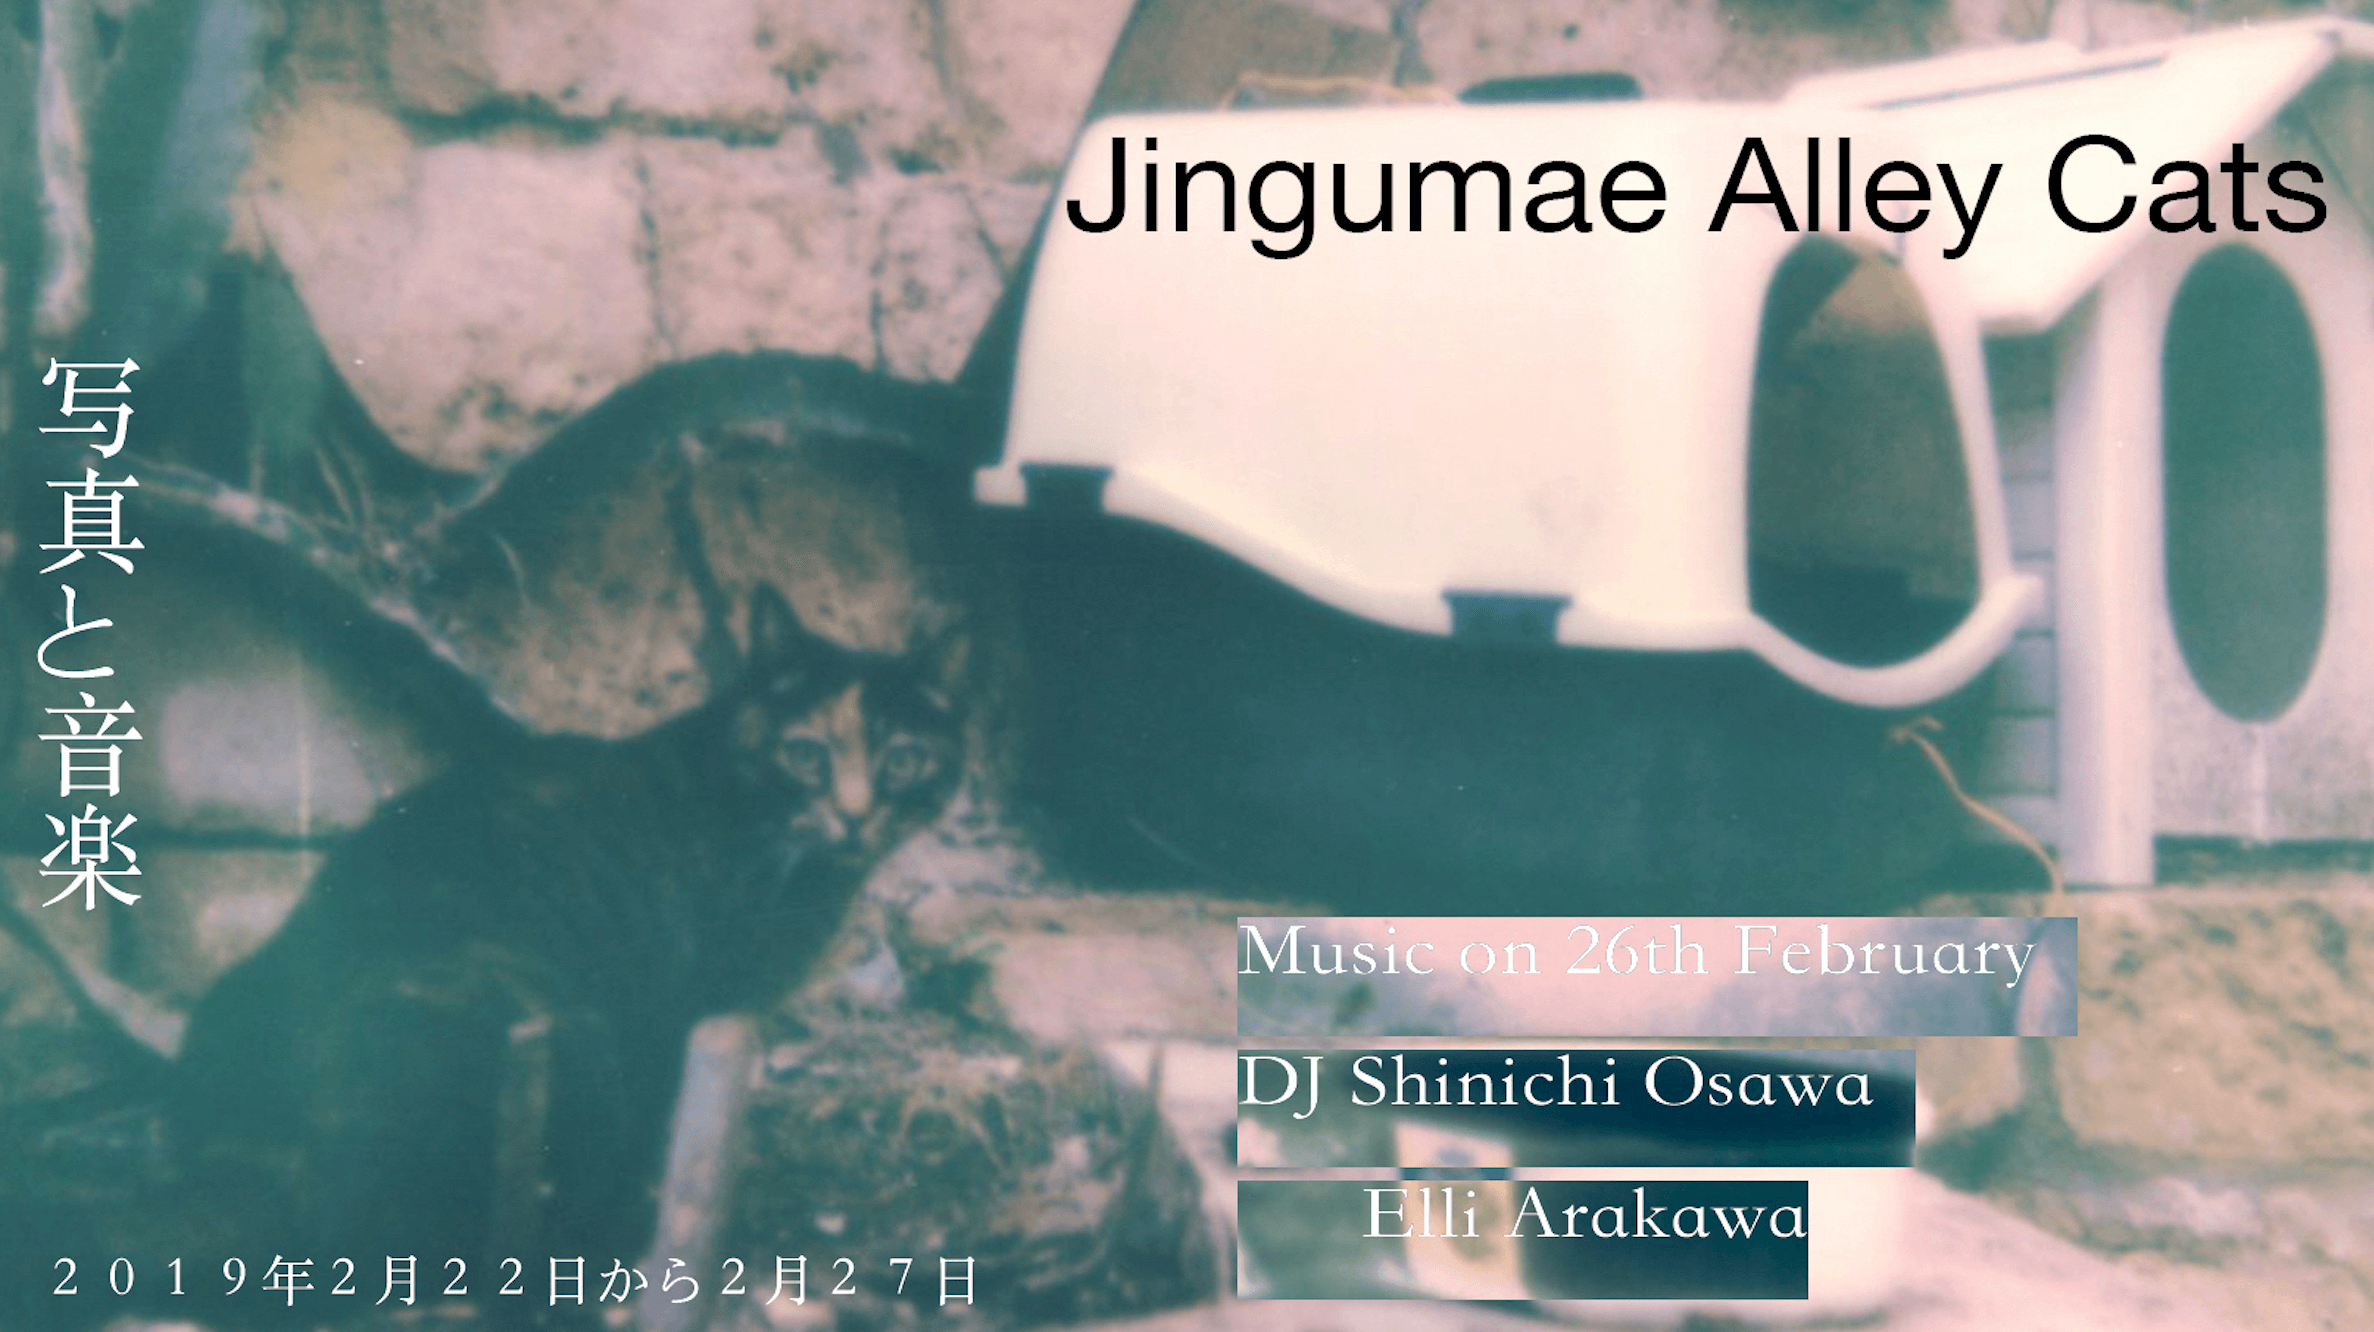 Jingumae Alley Cats - Polaroid Installation